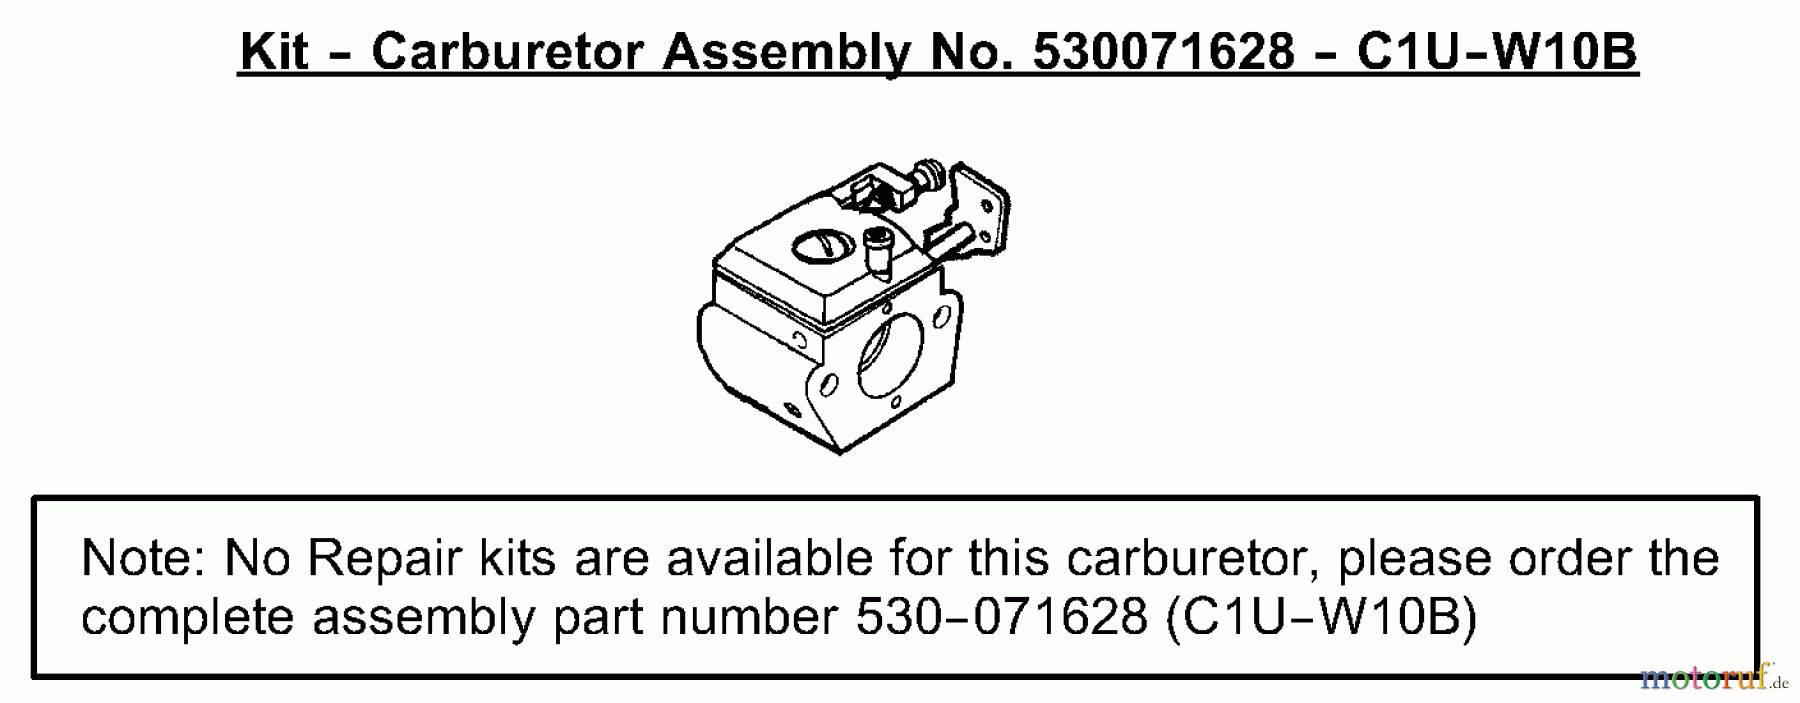  Poulan / Weed Eater Motorsensen, Trimmer SST (Type 2) - Weed Eater Featherlite LE String Trimmer Carburetor Assembly (C1U-W10B) P/N 530071628